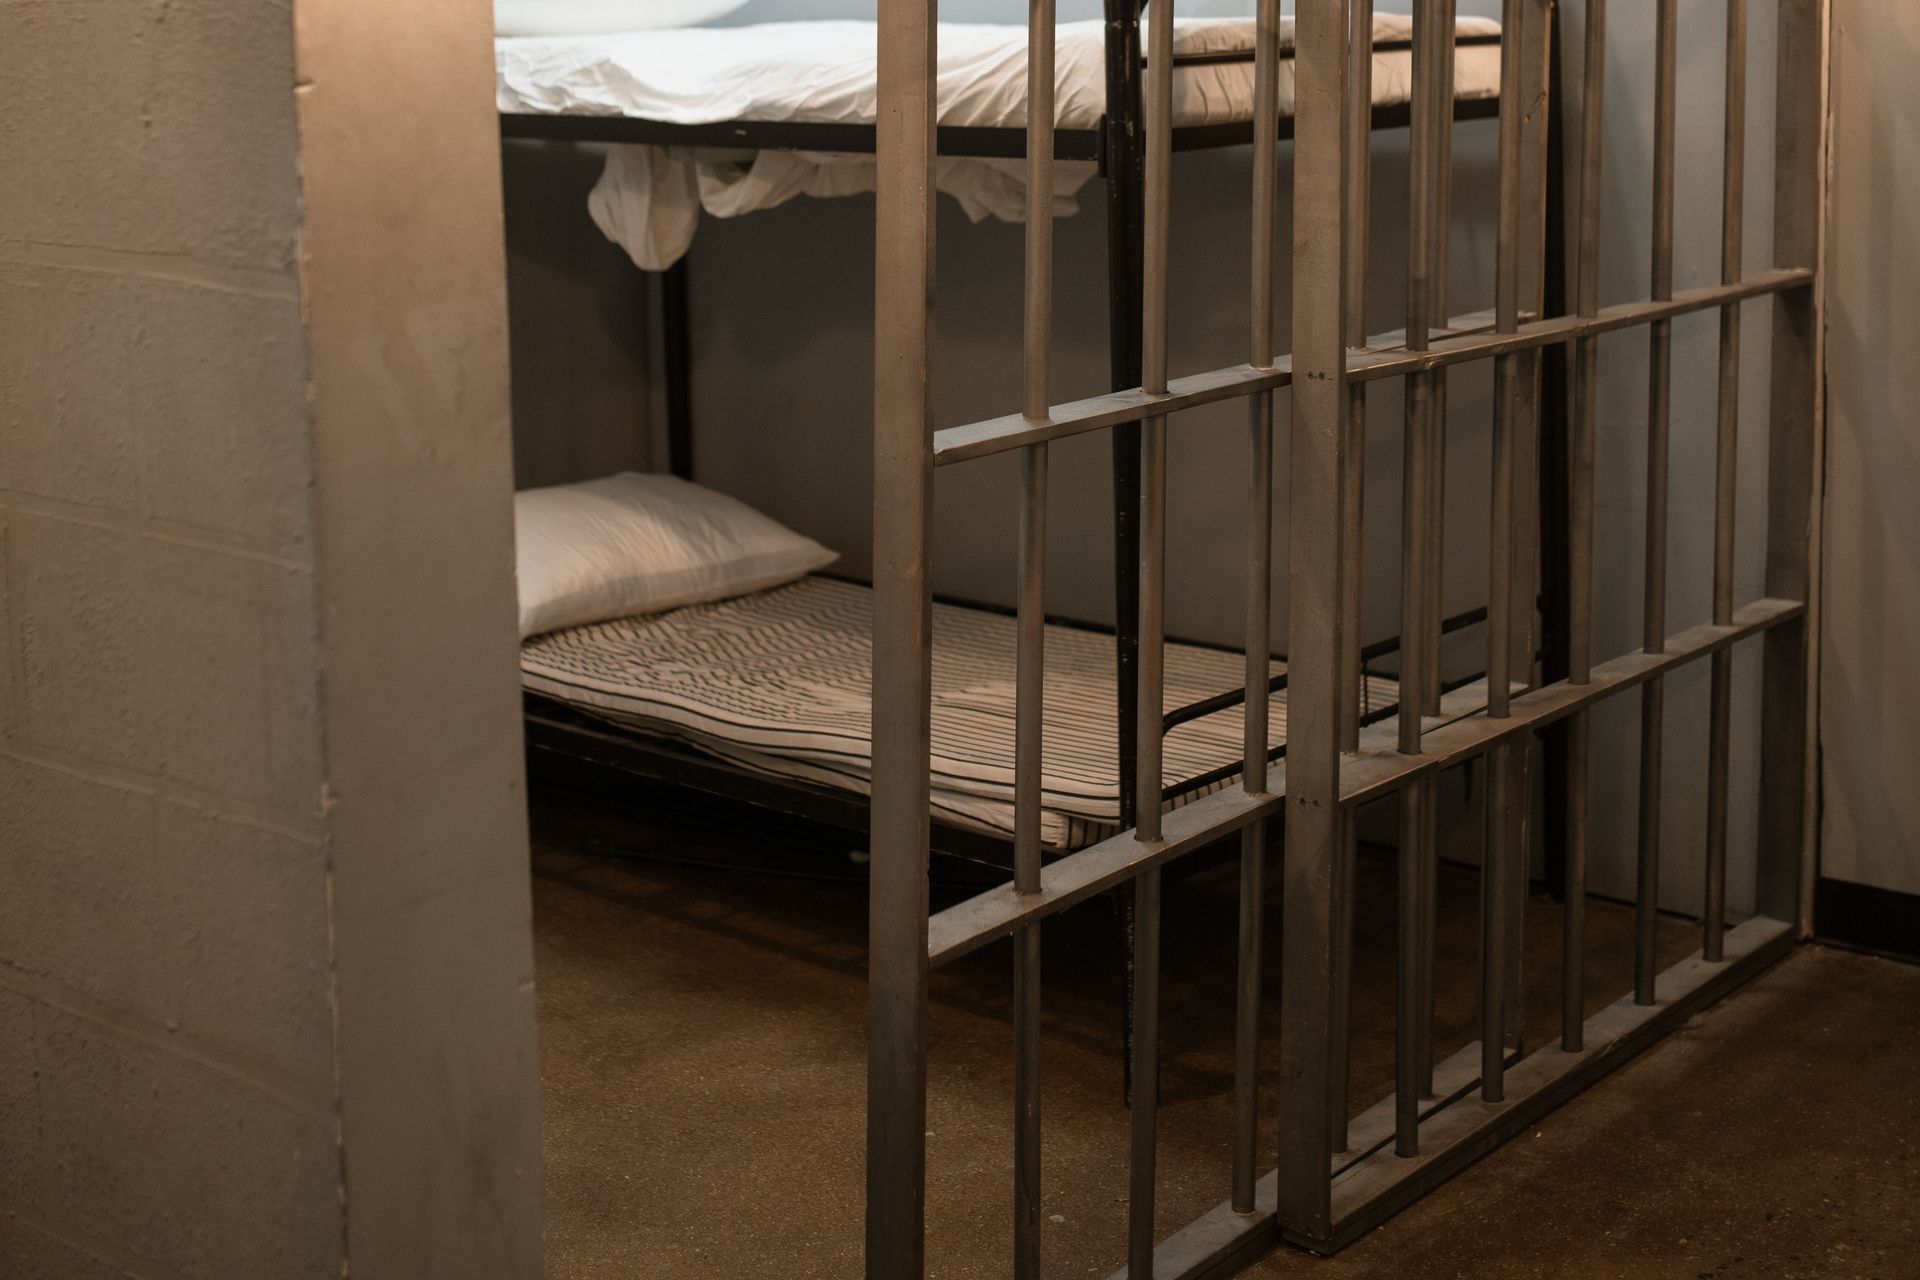 Utah county jail cell